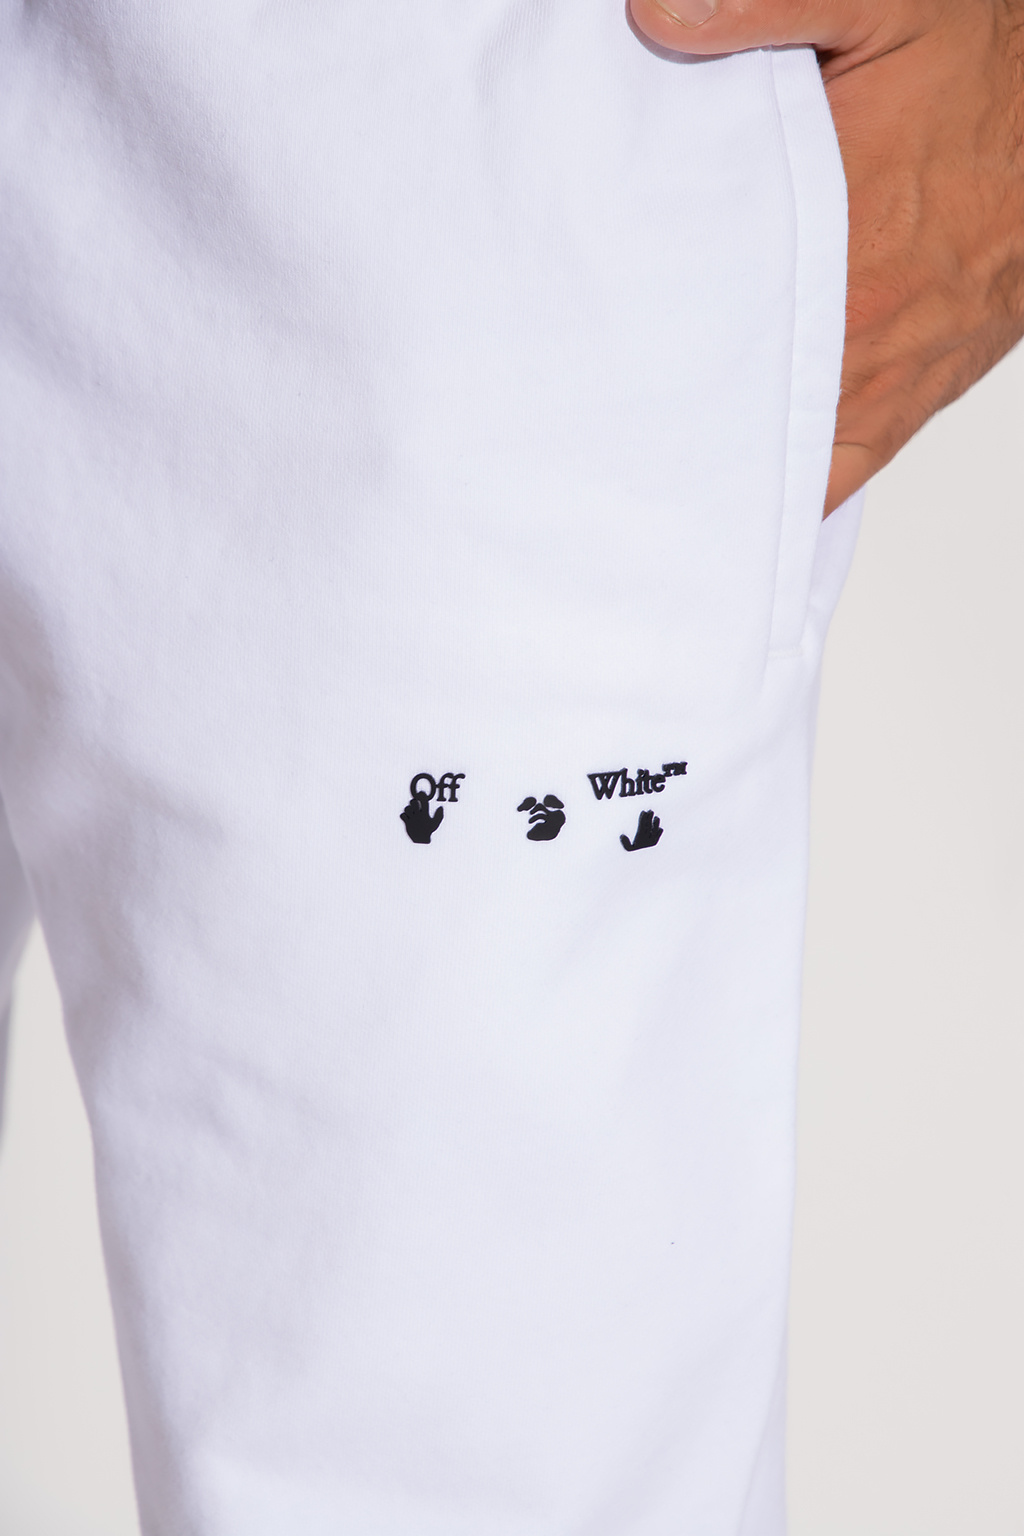 Off-White Air Jordan retro 12 Indigo matching shirts Navy CEO Society